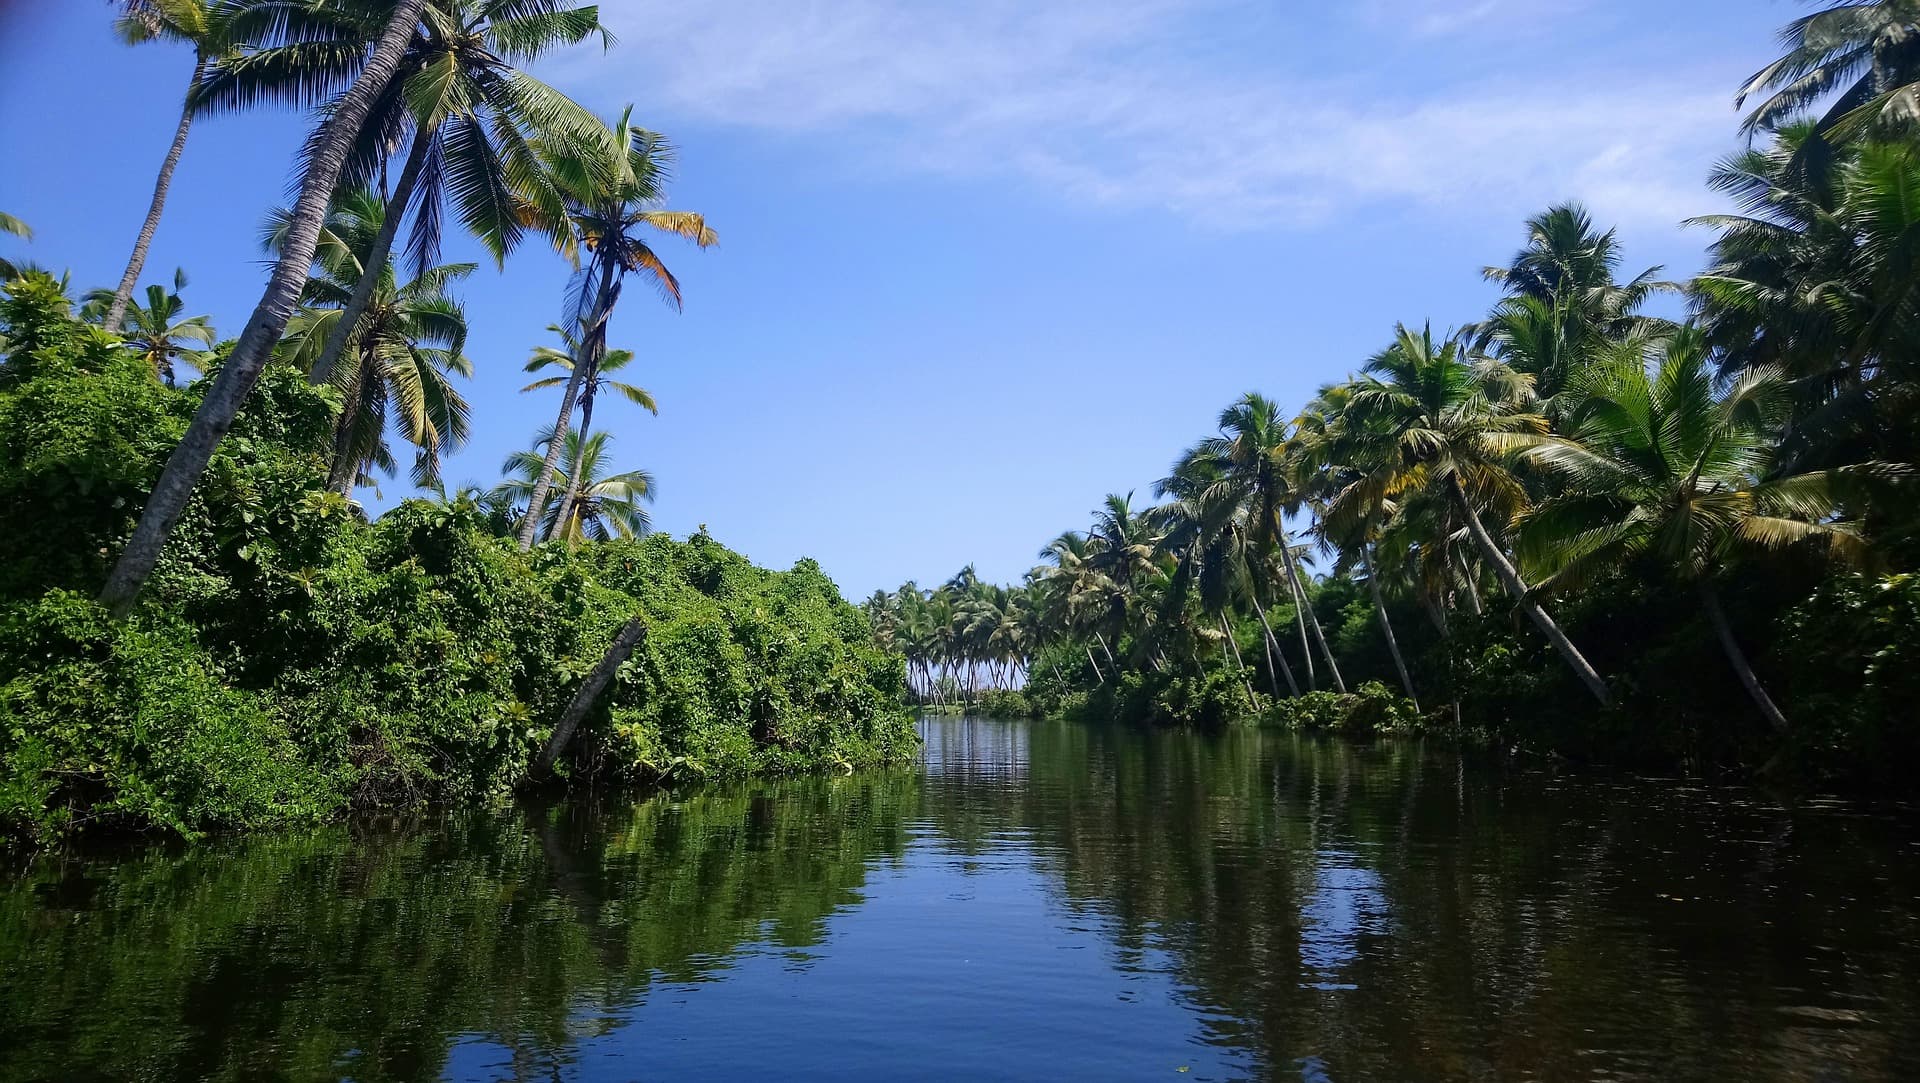 adventour - India - Kerala backwaters trees